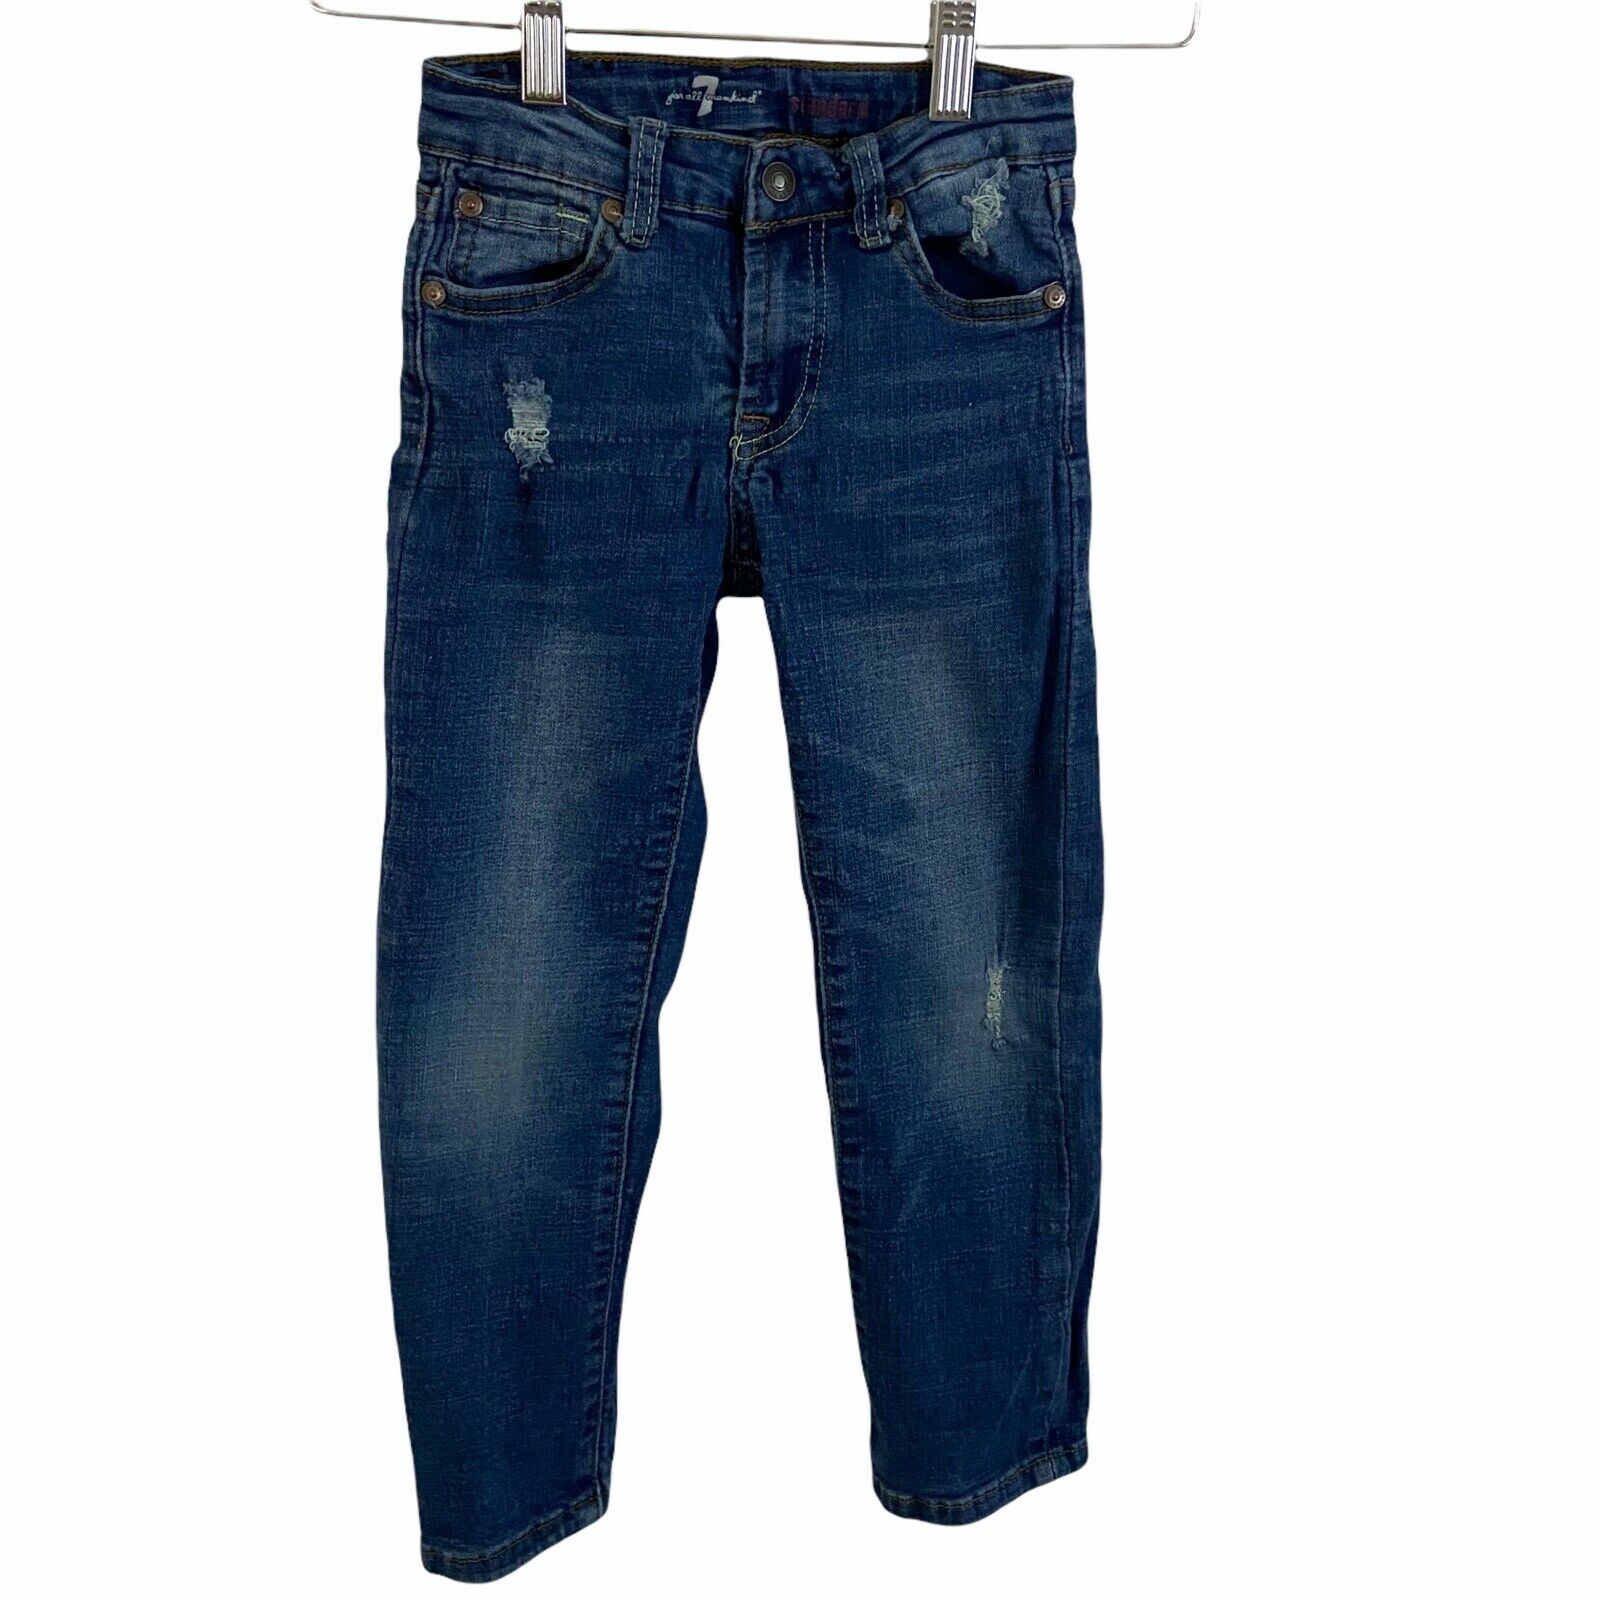 7 For All Mankind Boys Distressed Denim Jeans Sz 5 Blue Casual Stretch